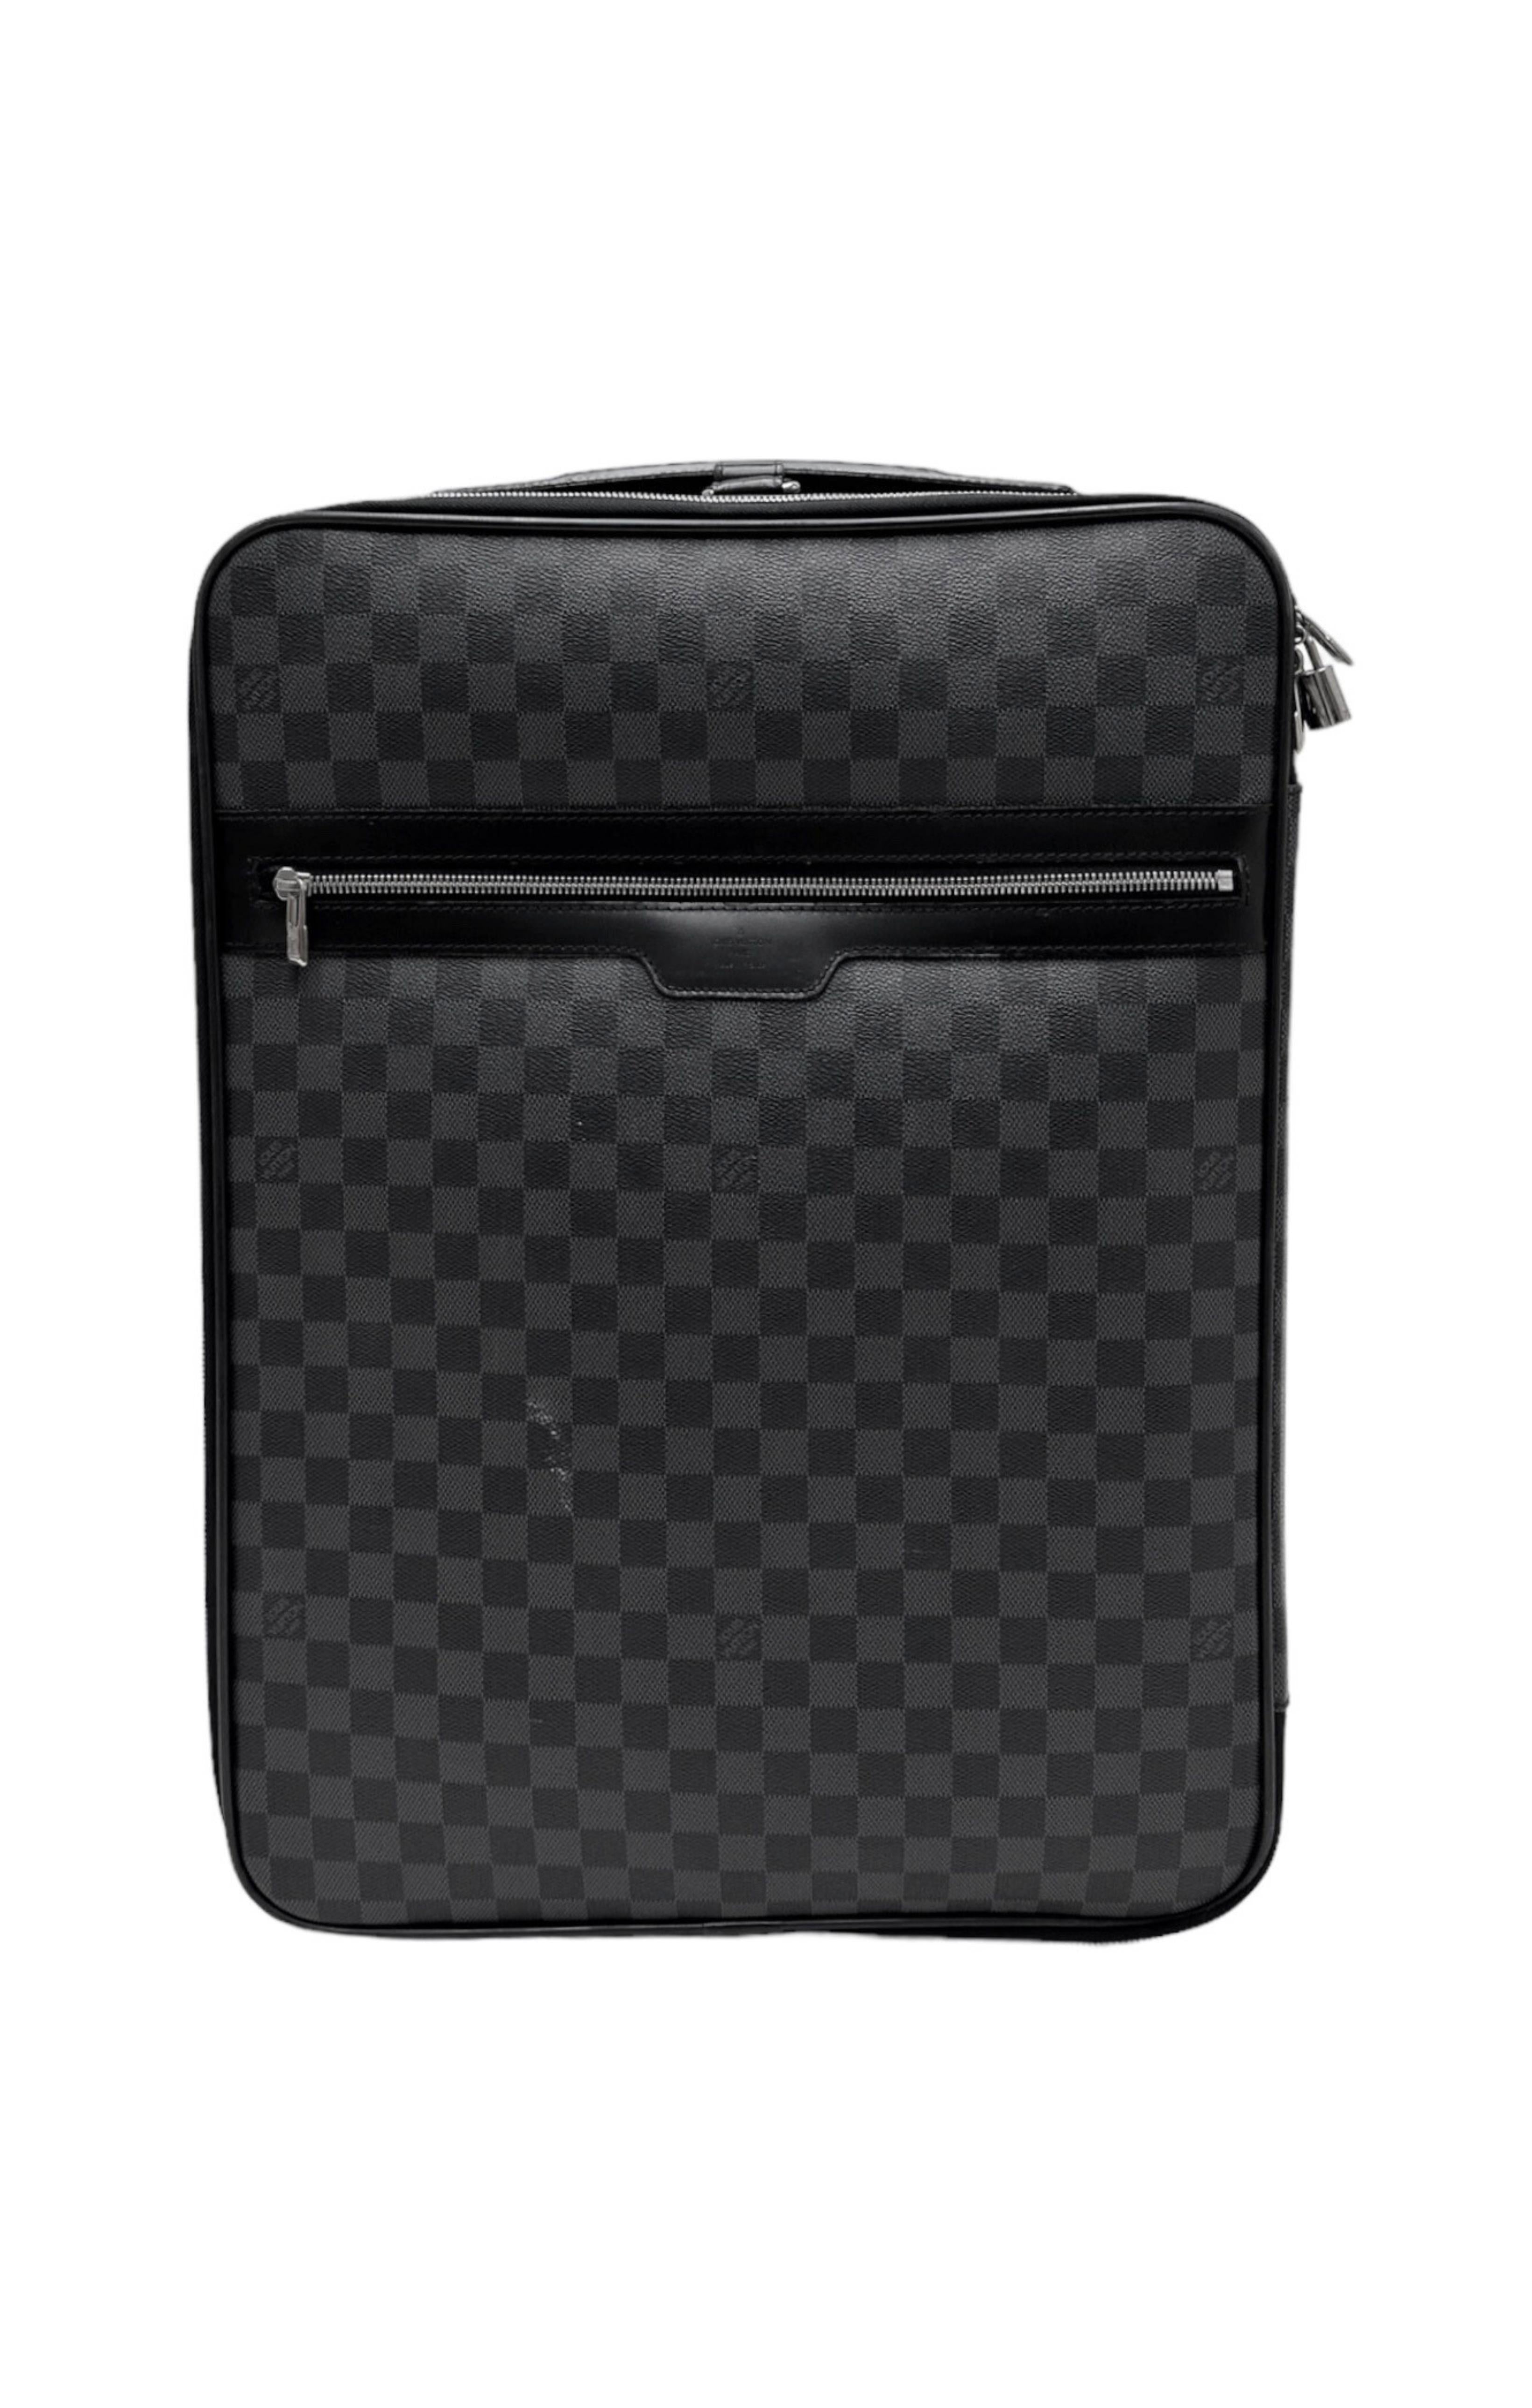 Louis Vuitton, Bags, Louis Vuitton Laptop Bag